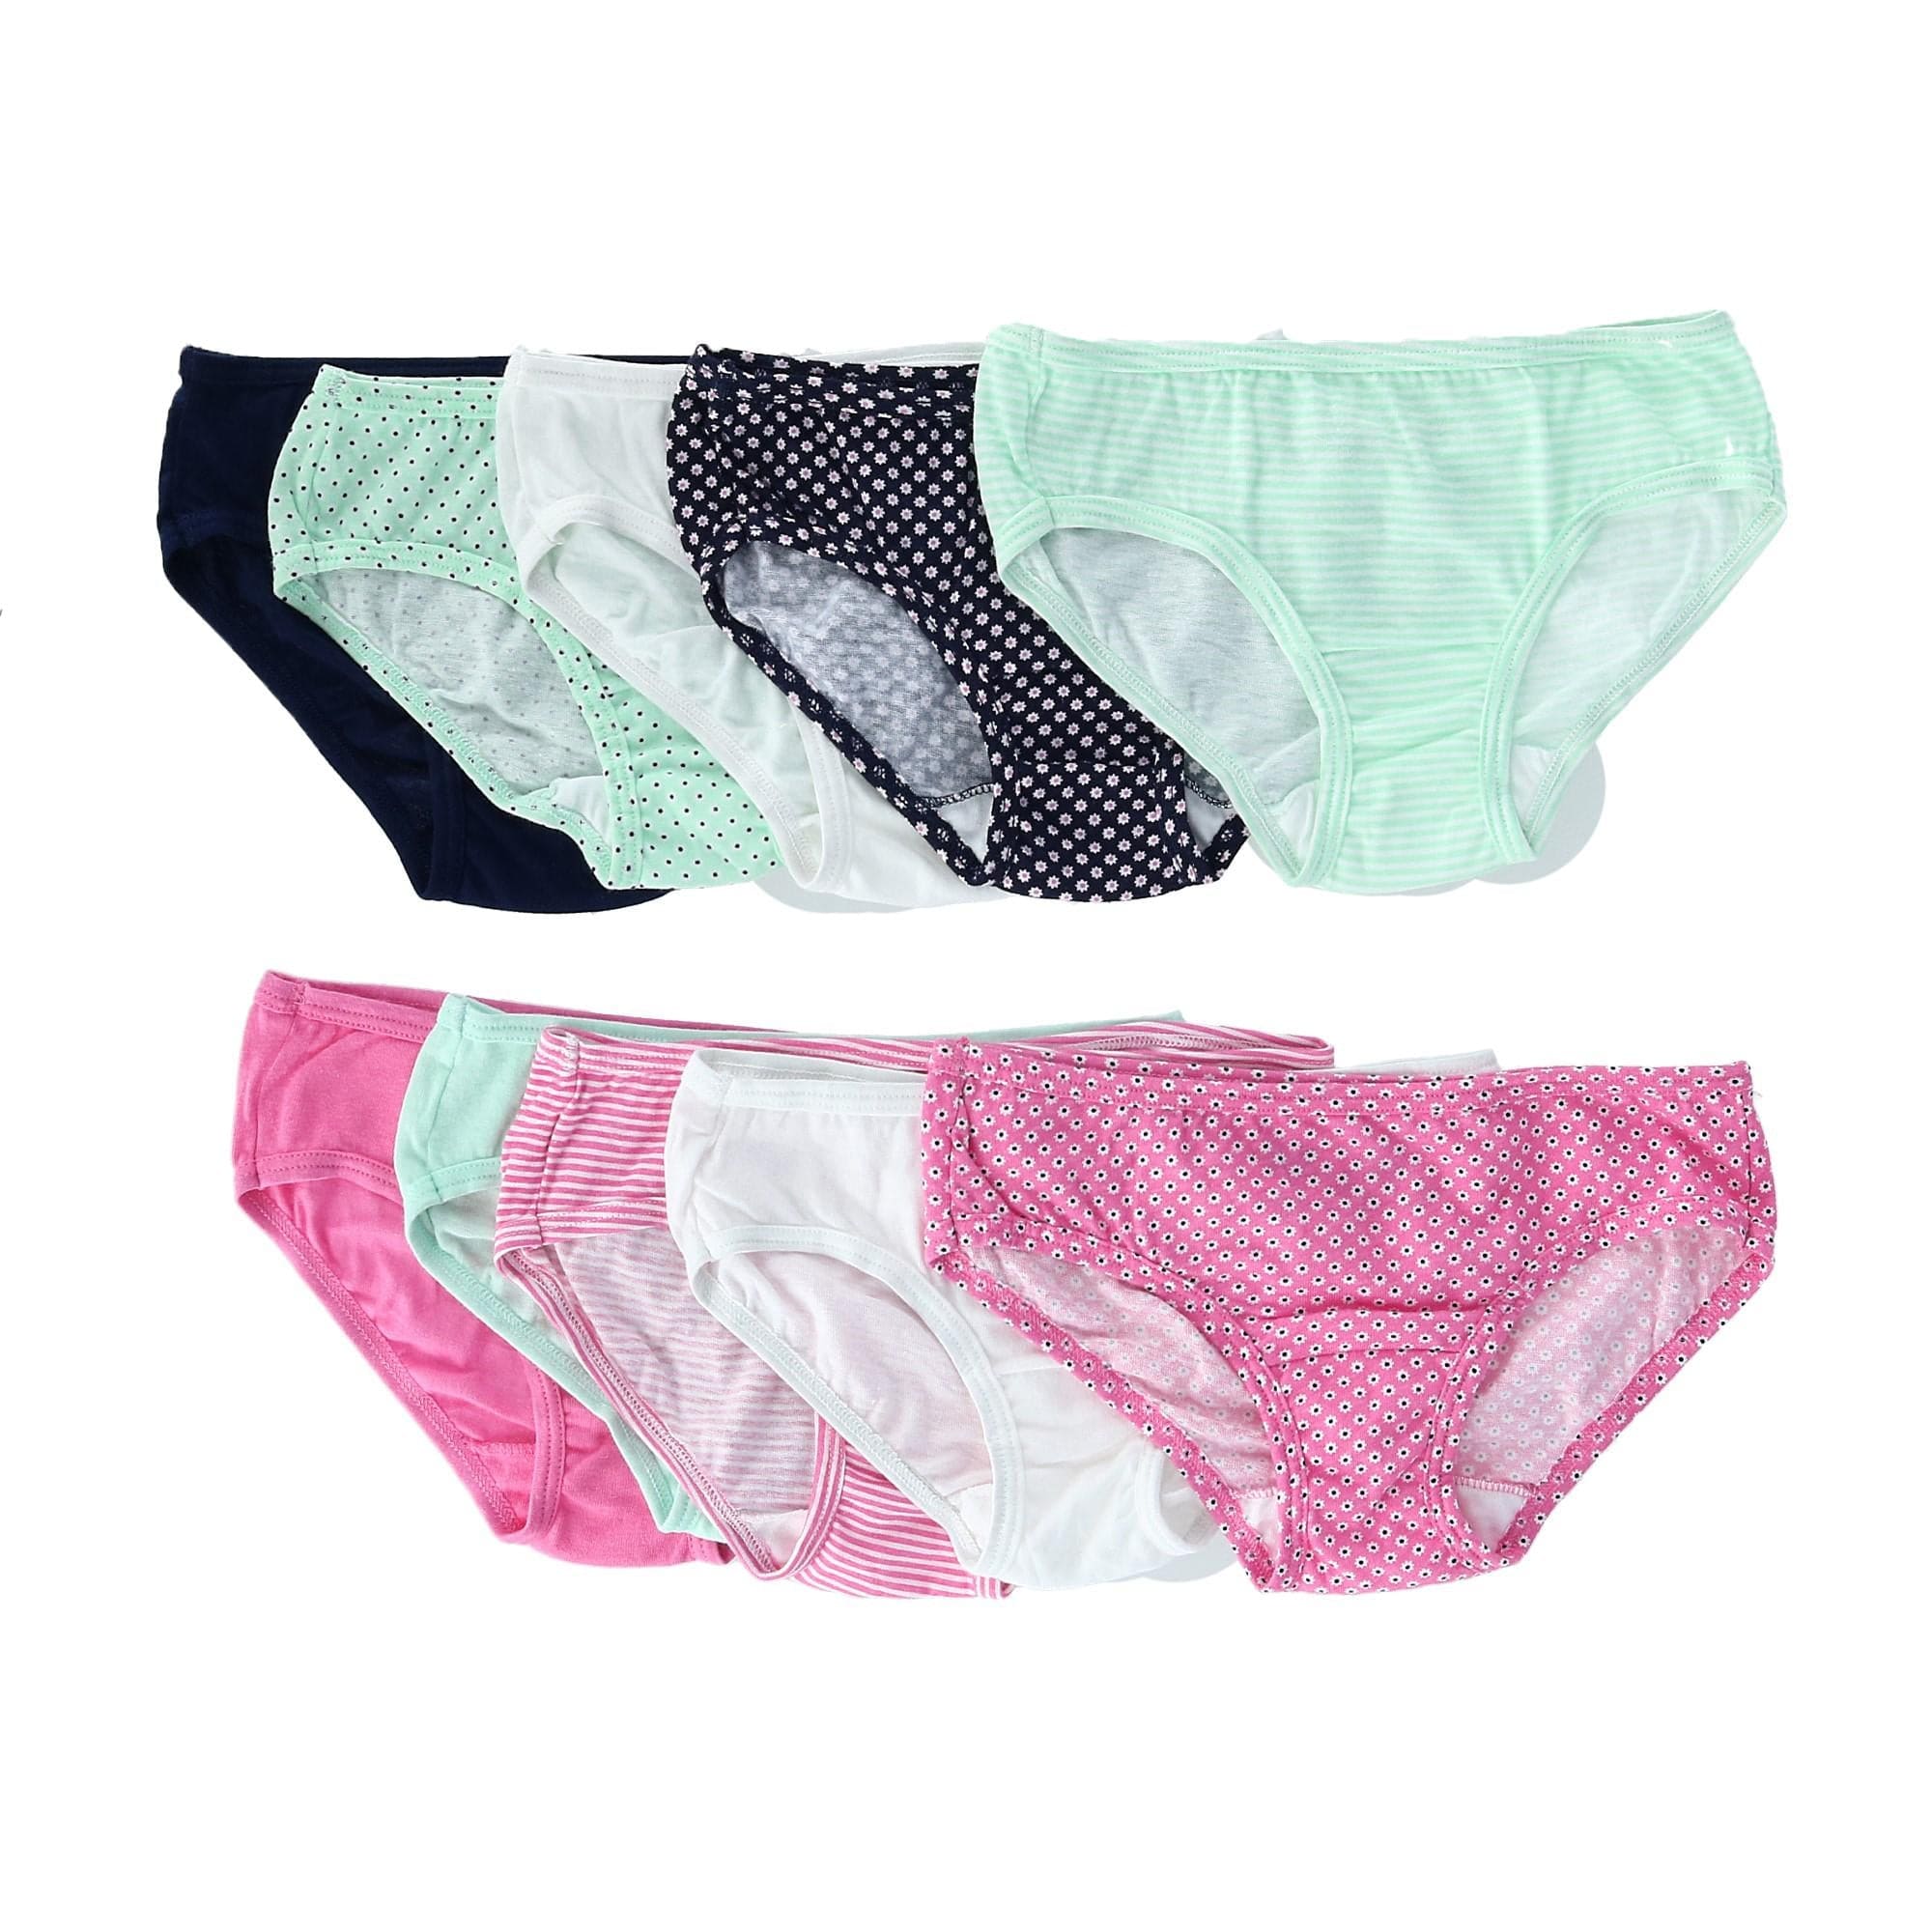  Hanes Girls Hipster Underwear Pack, Cotton Hipster Panties, Cotton  Panties, 10-Pack